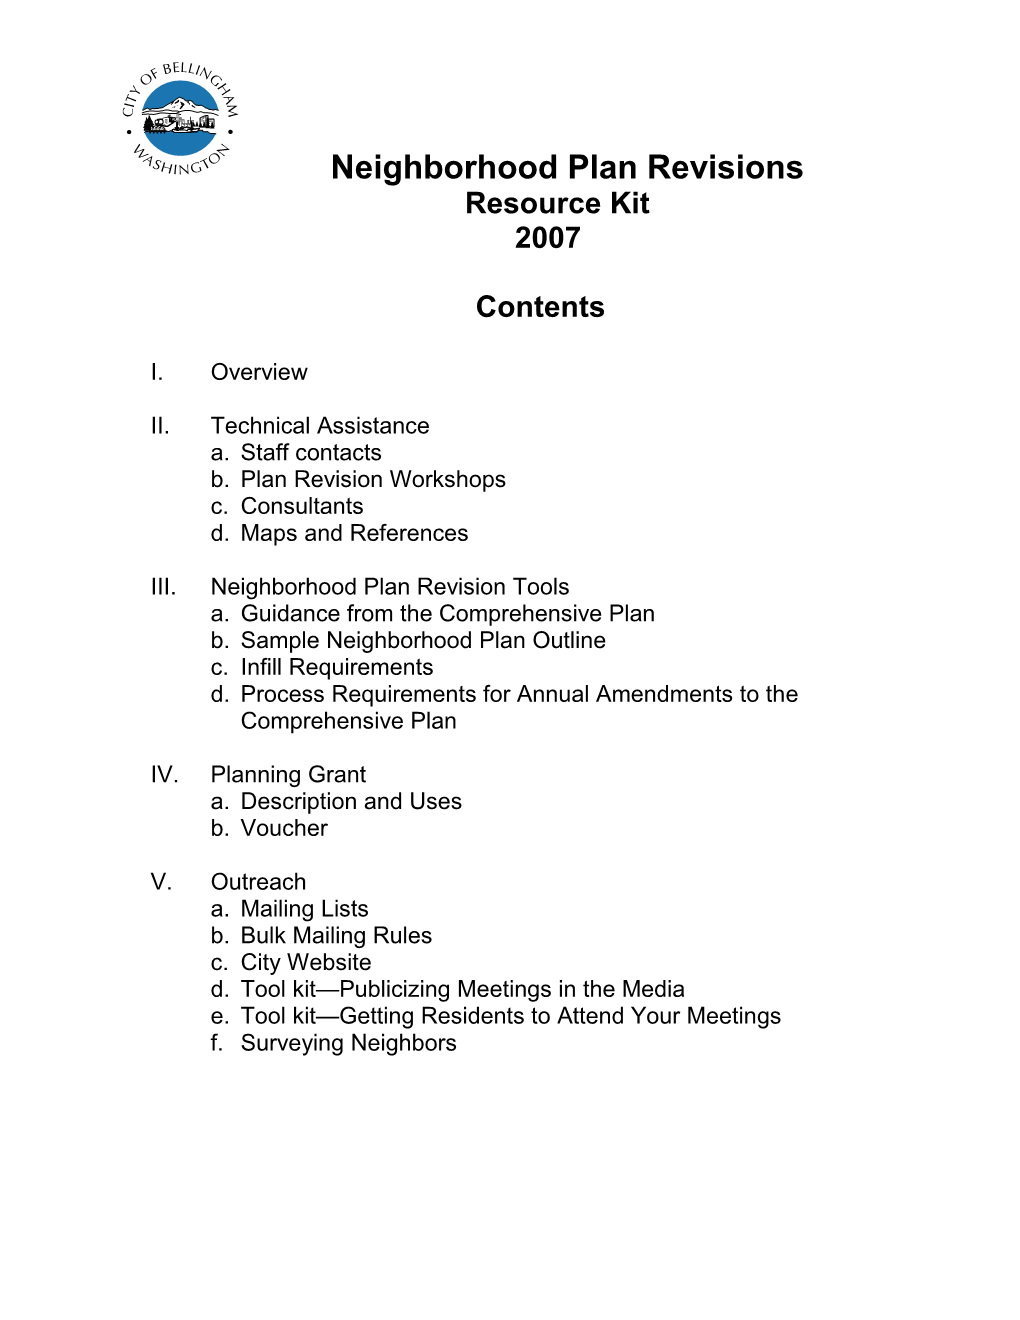 Neighborhood Plan Revision Resource